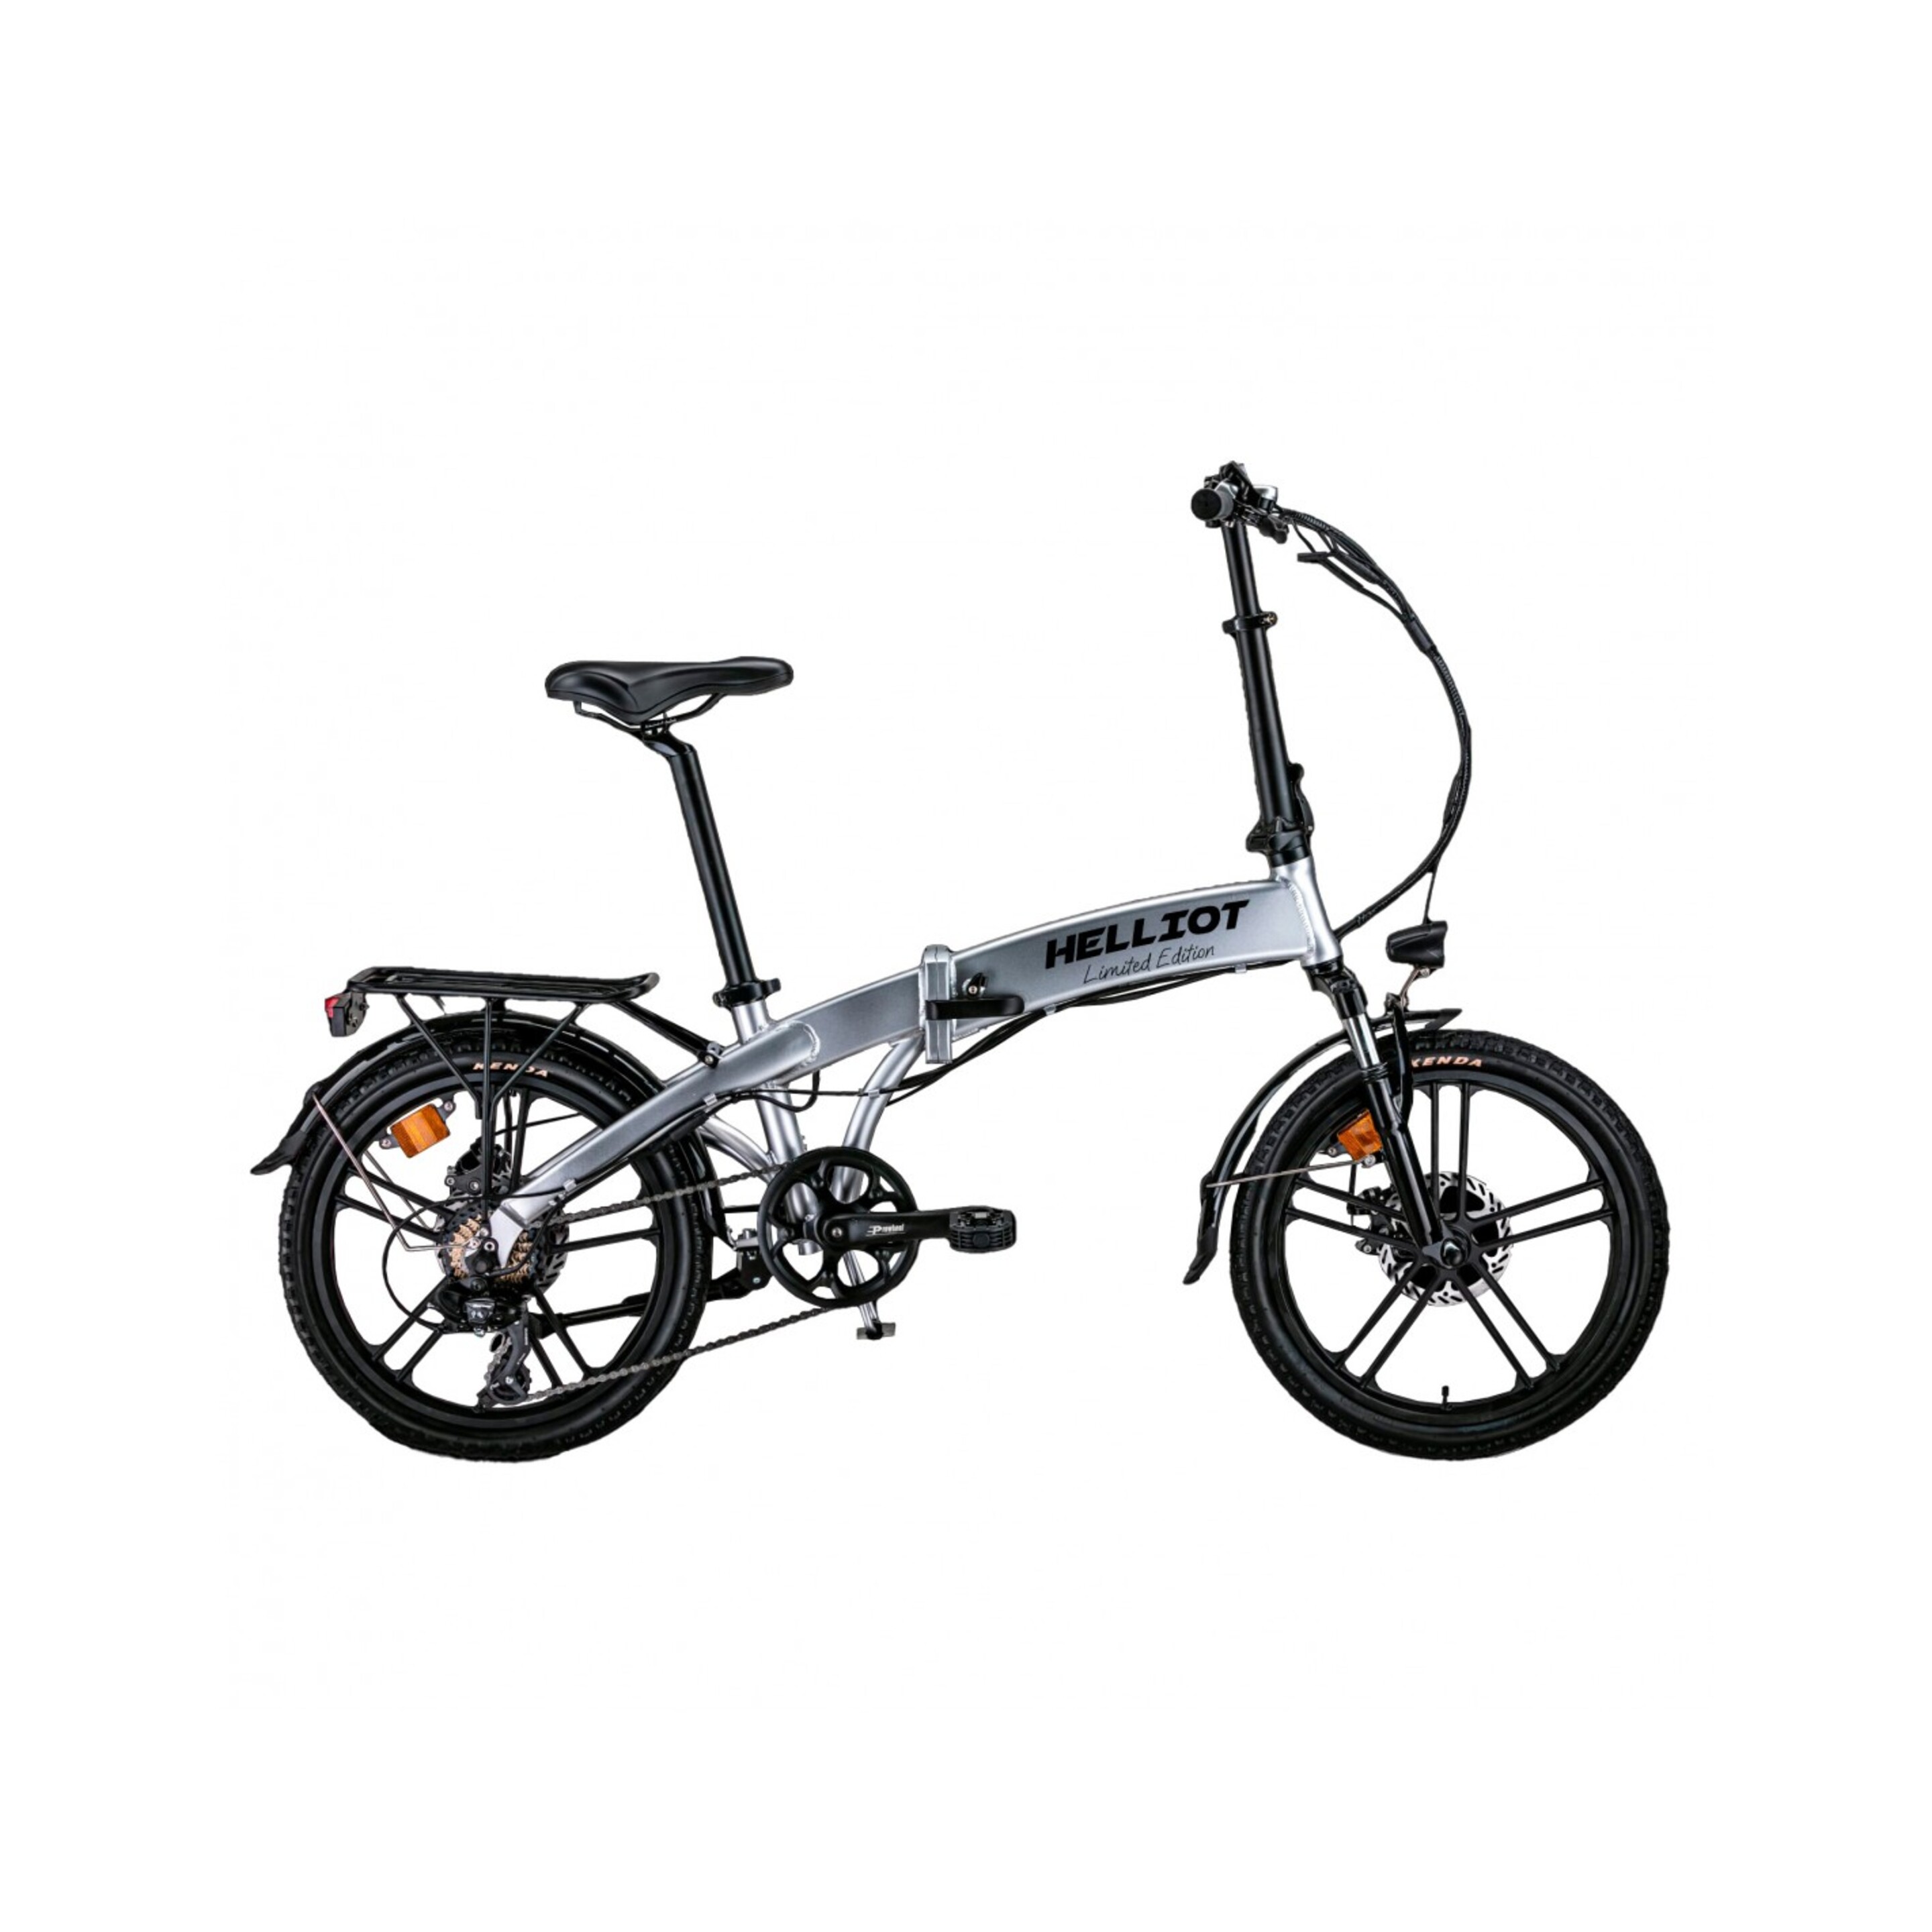 Bicicleta Eléctrica Plegable Helliot Rs Oxford 36v 8,8ah 250w, 20 Pulgadas